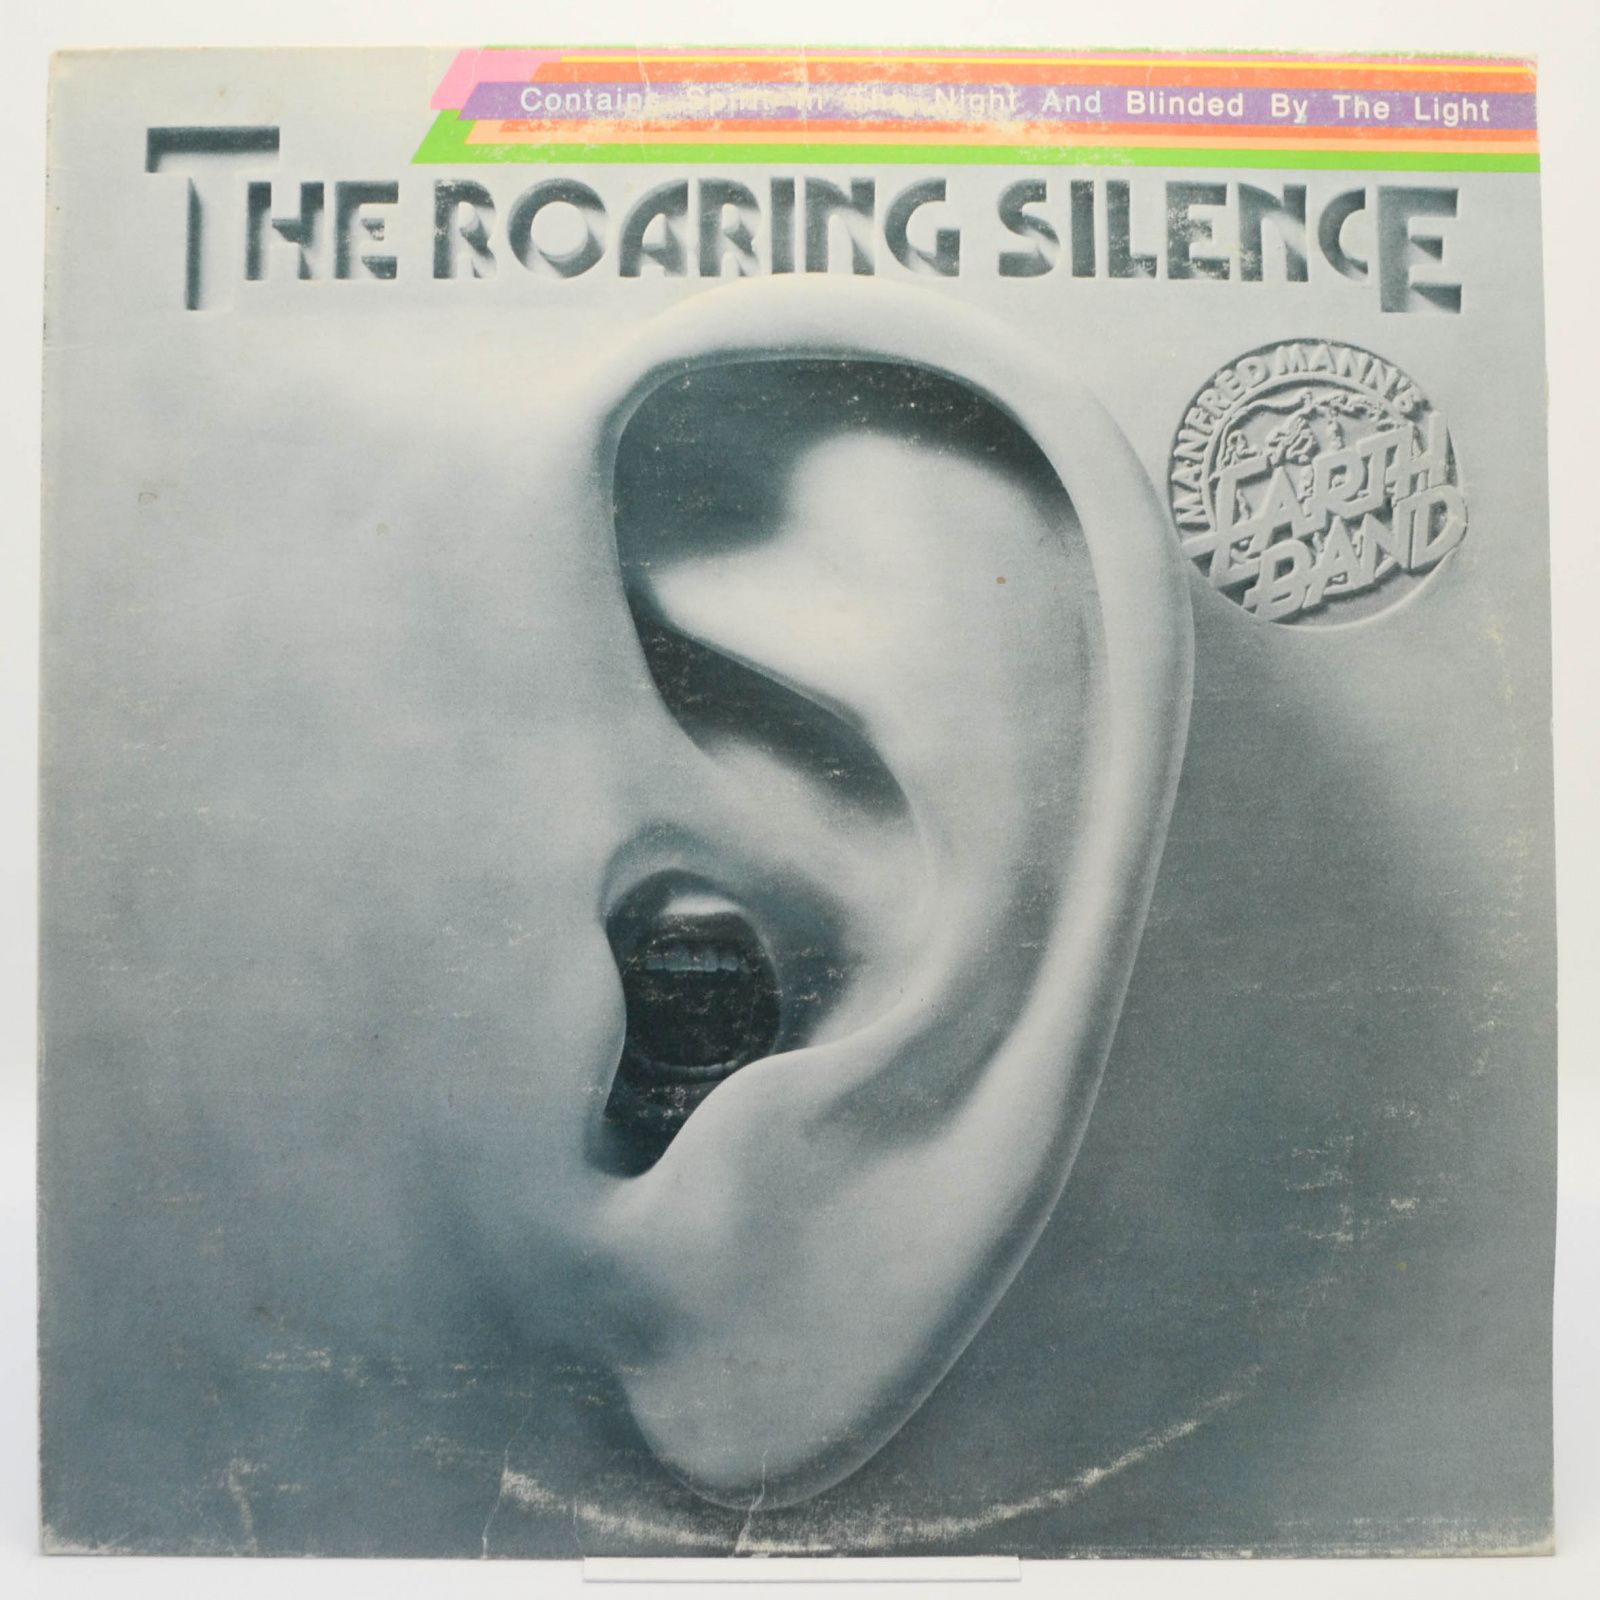 The Roaring Silence, 1976